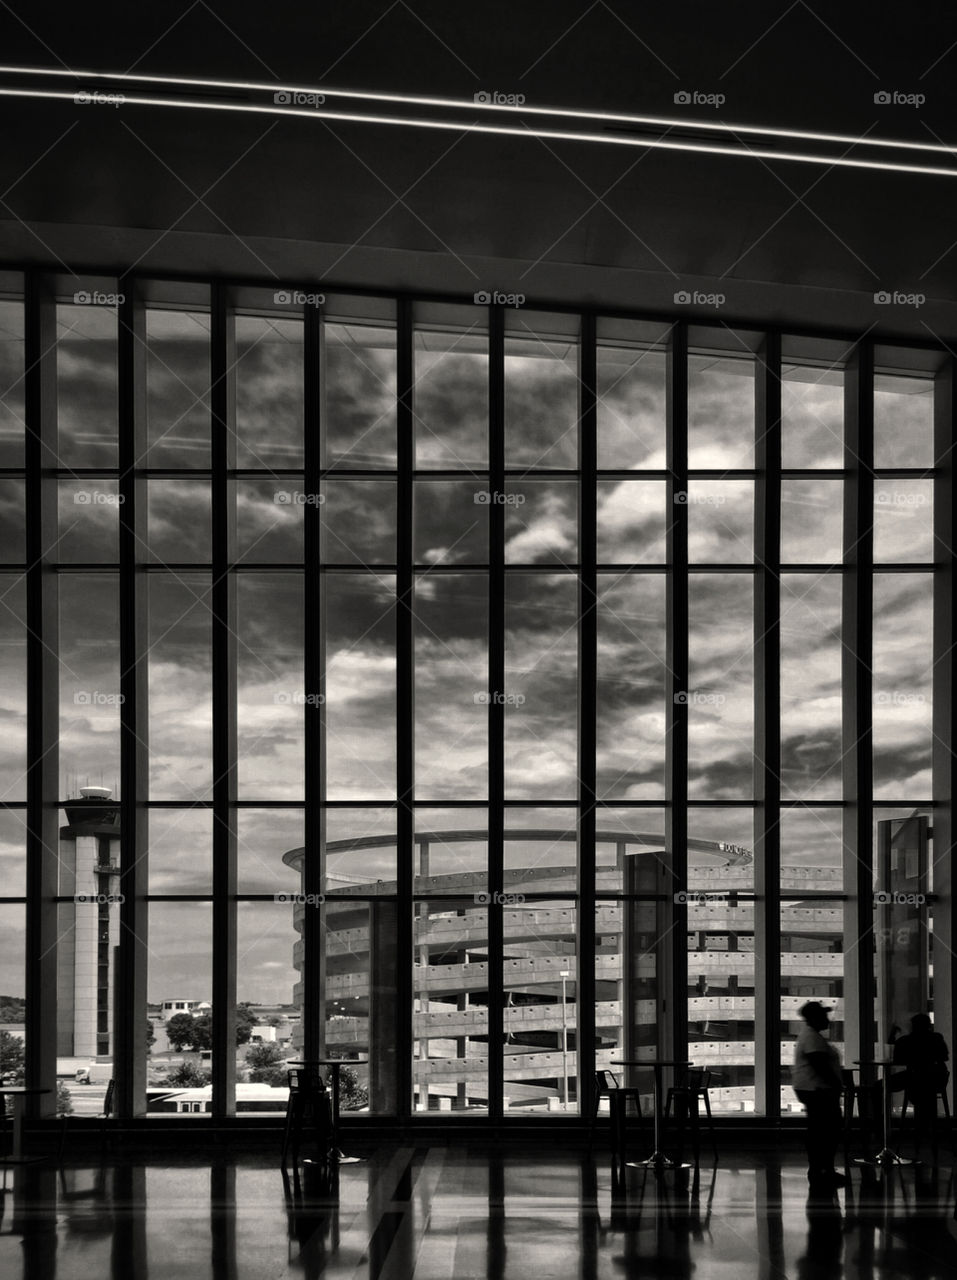 Window Space at Charlotte Douglas International Airport.